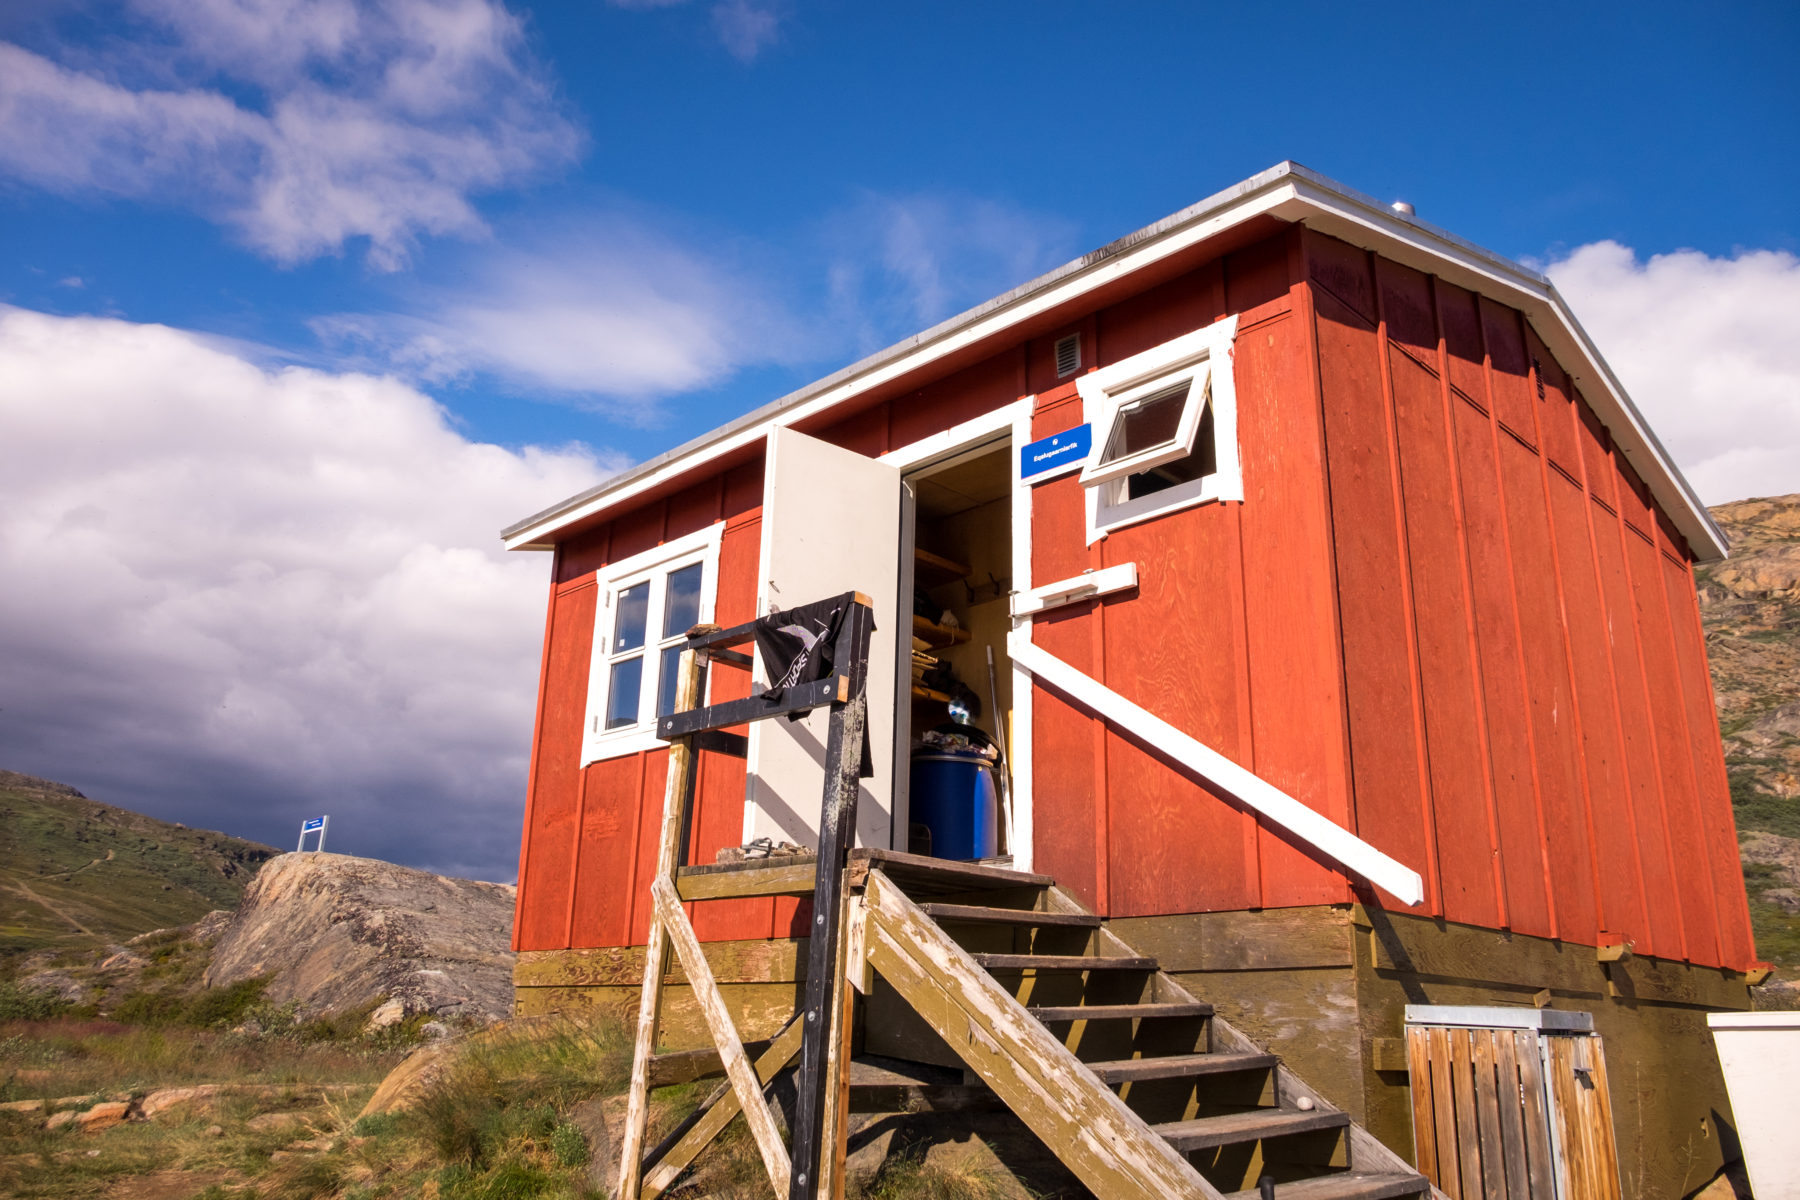 Eqalugaarniarfik hut on the Arctic Circle Trail